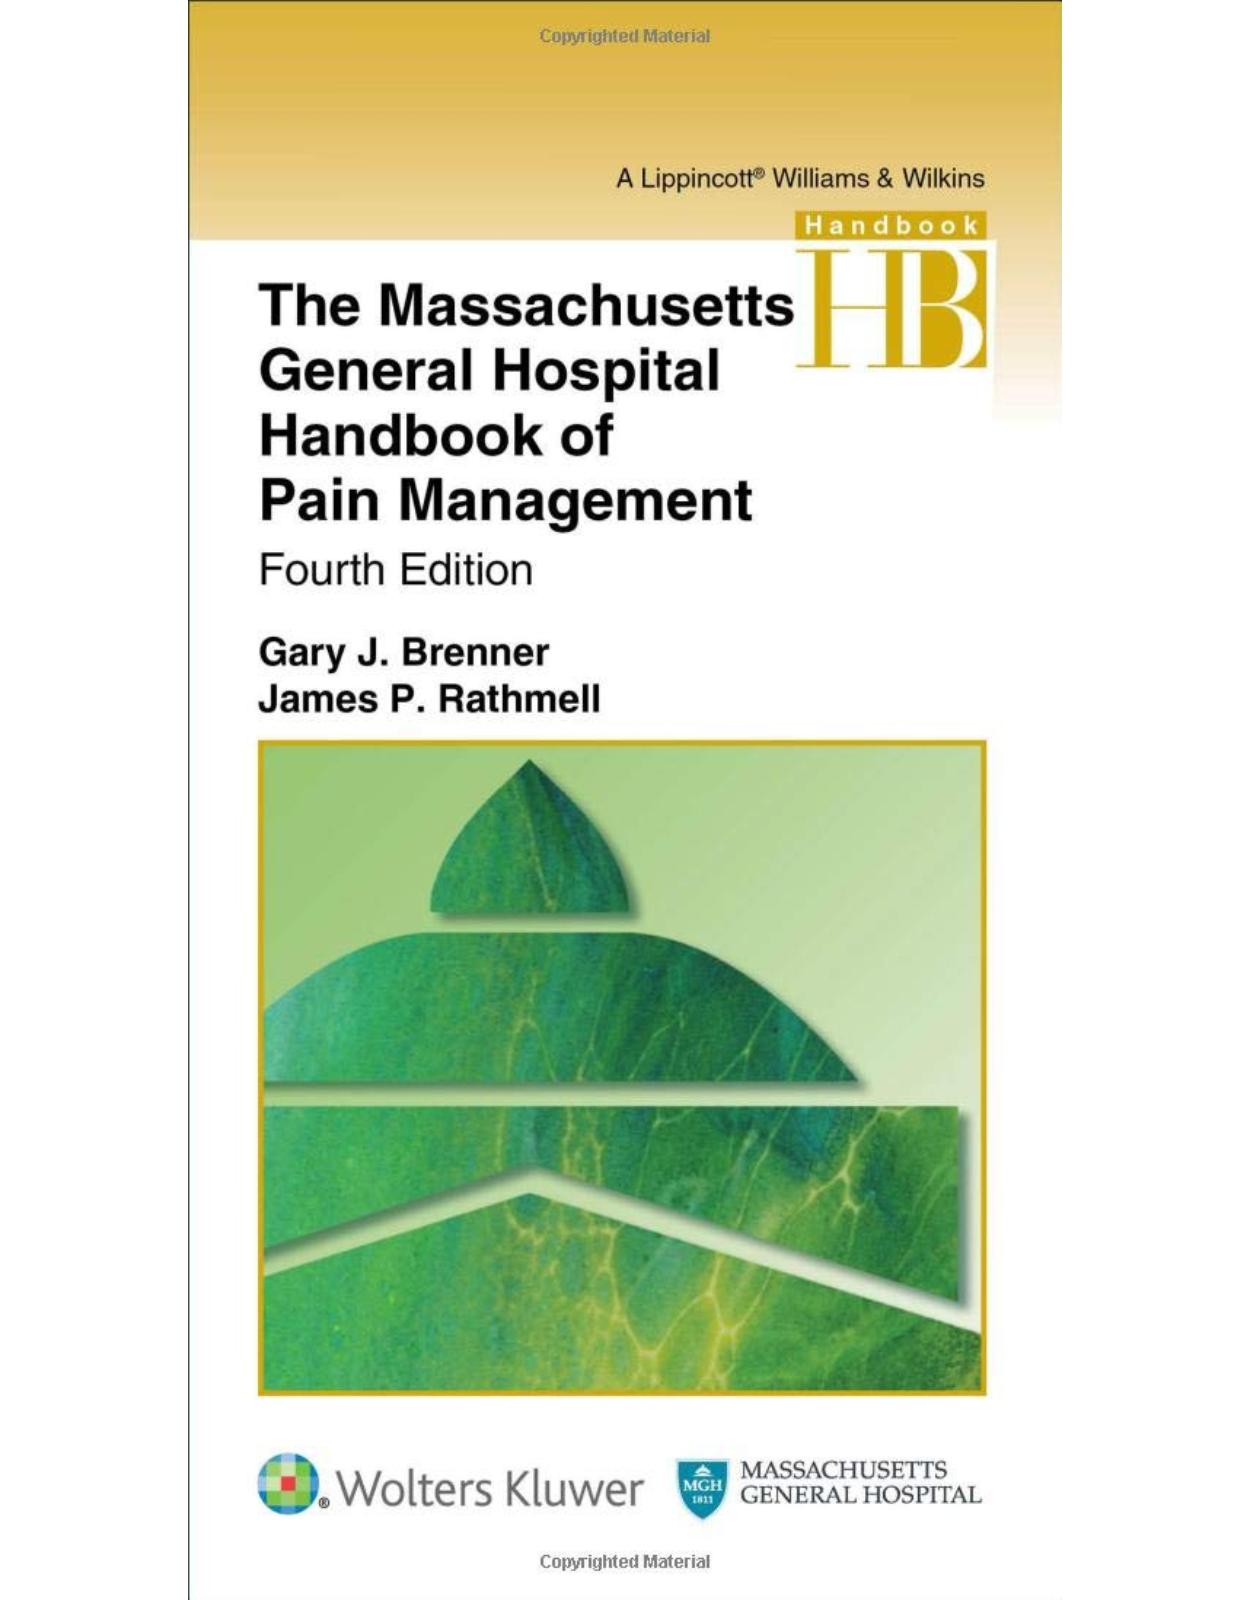 The Massachusetts General Hospital Handbook of Pain Management, Fourth edition